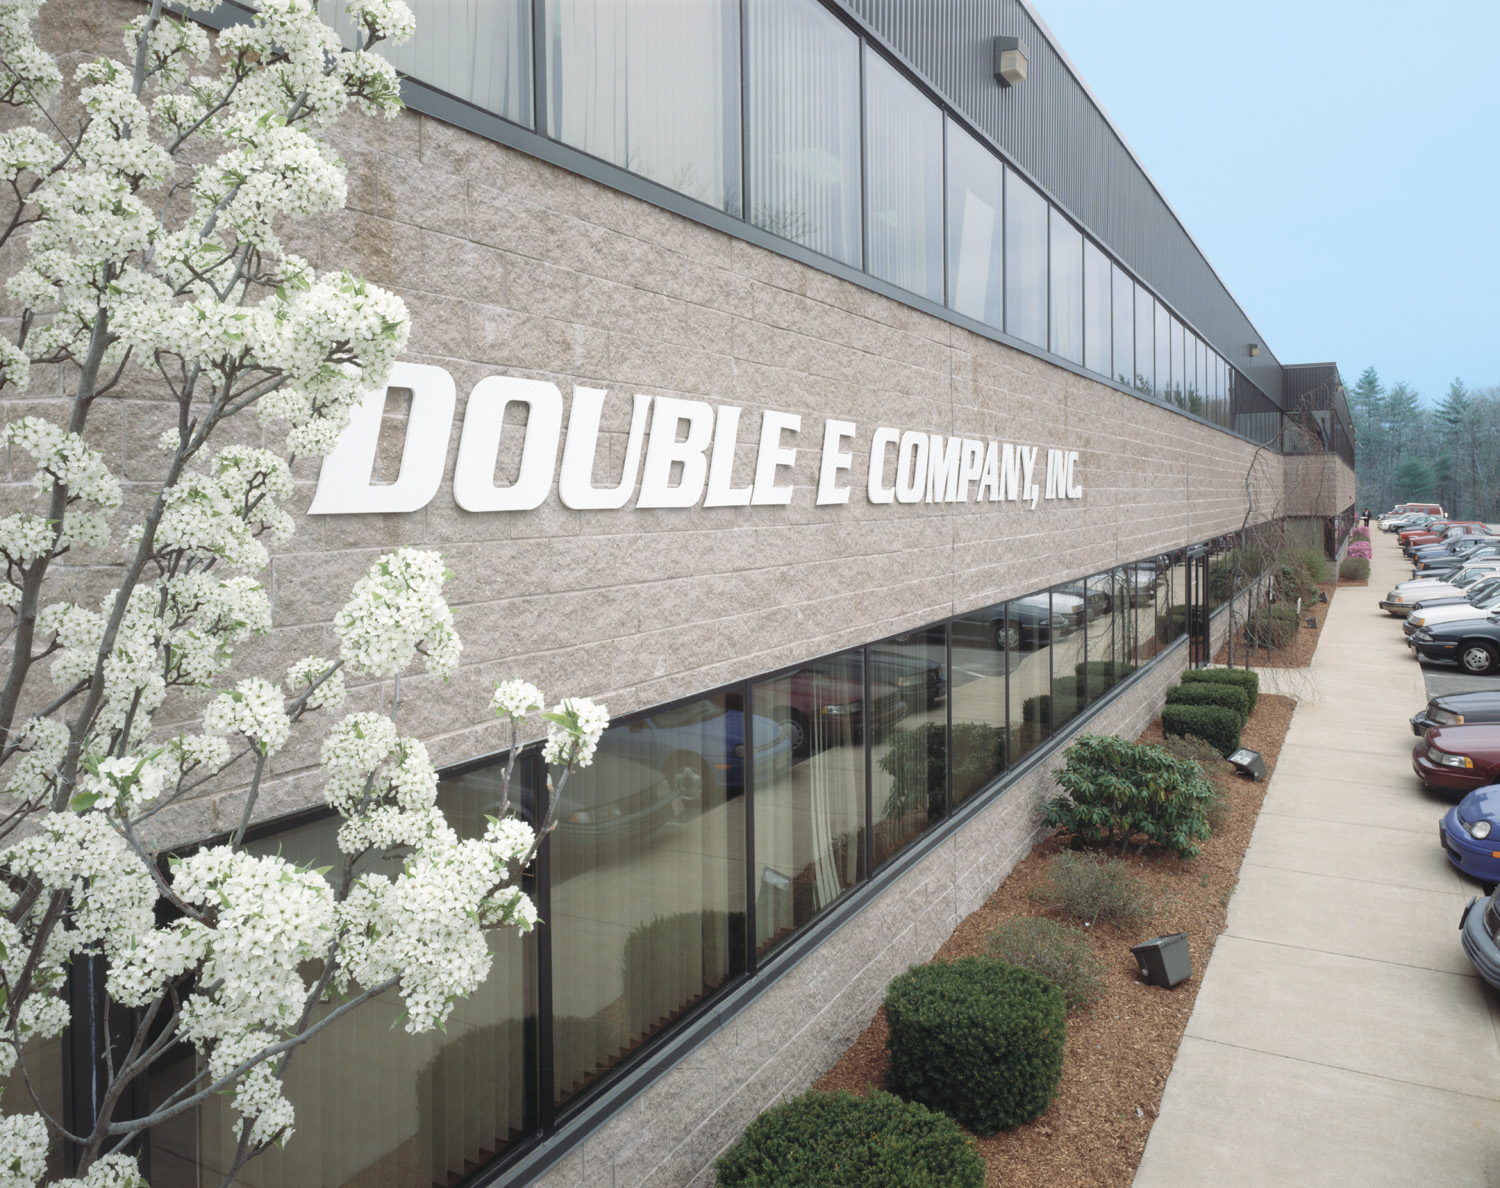 Double E Company World Headquarters